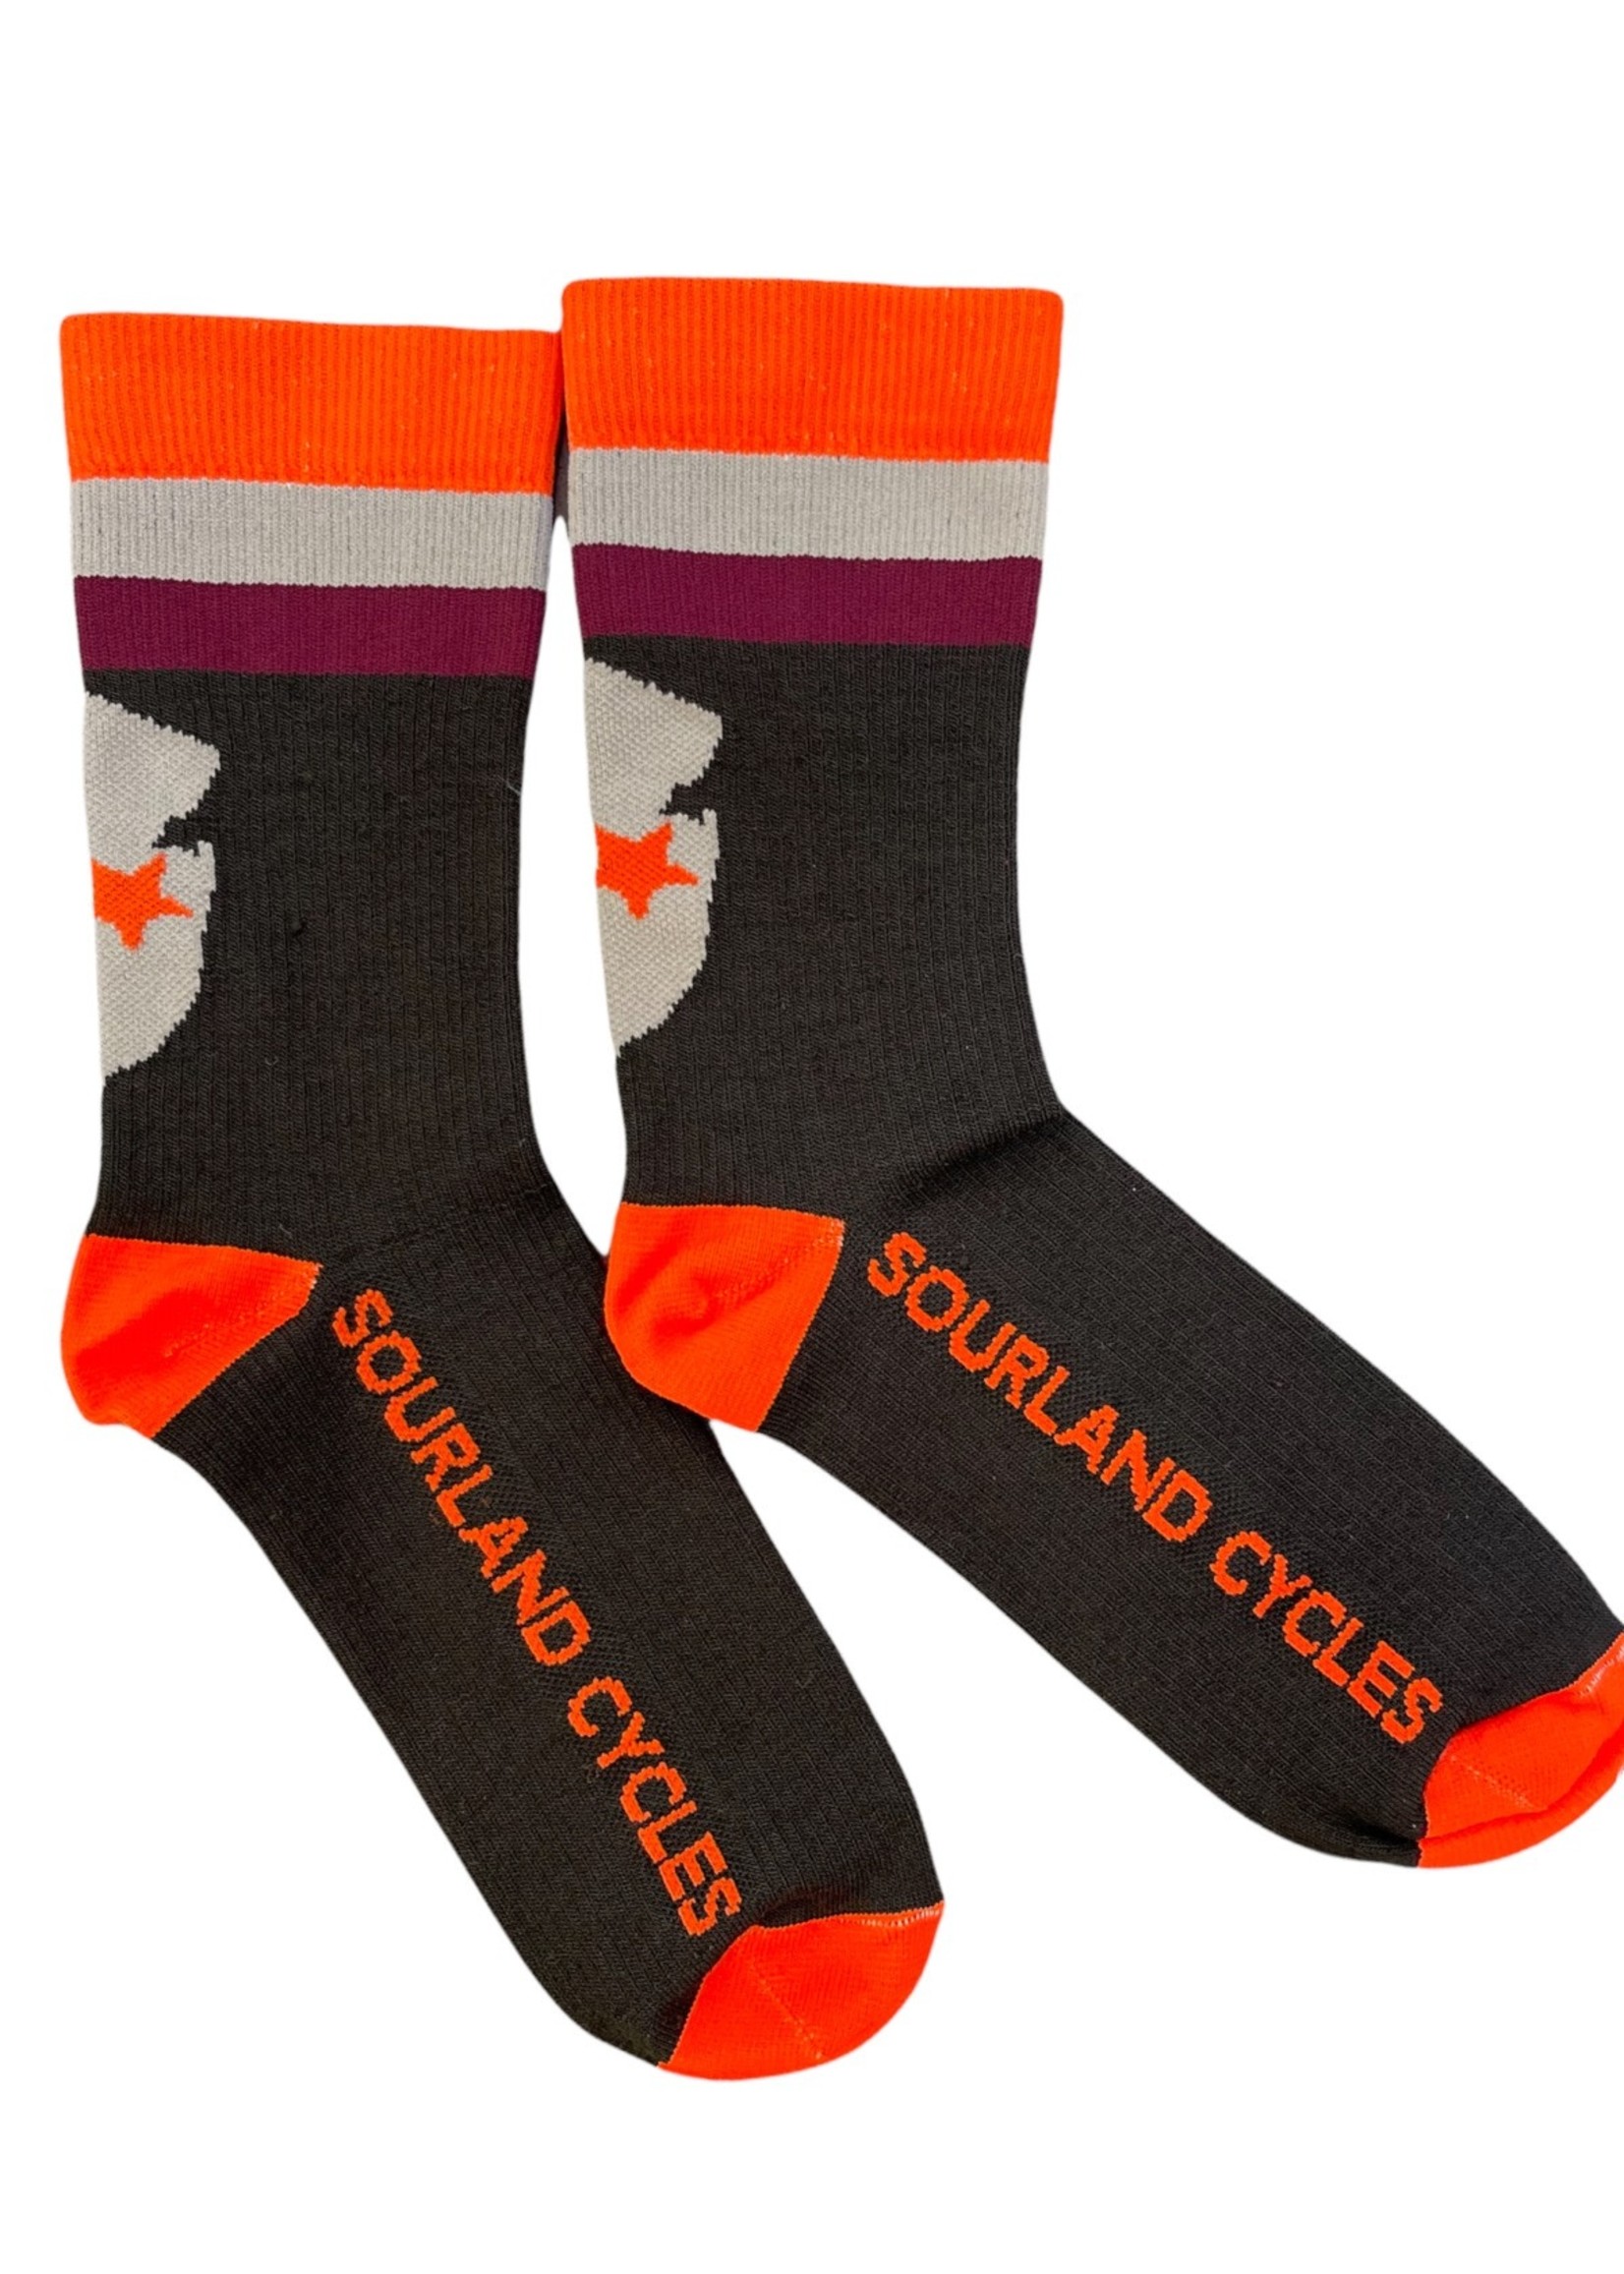 Sock Guy Sourland Cycles Socks